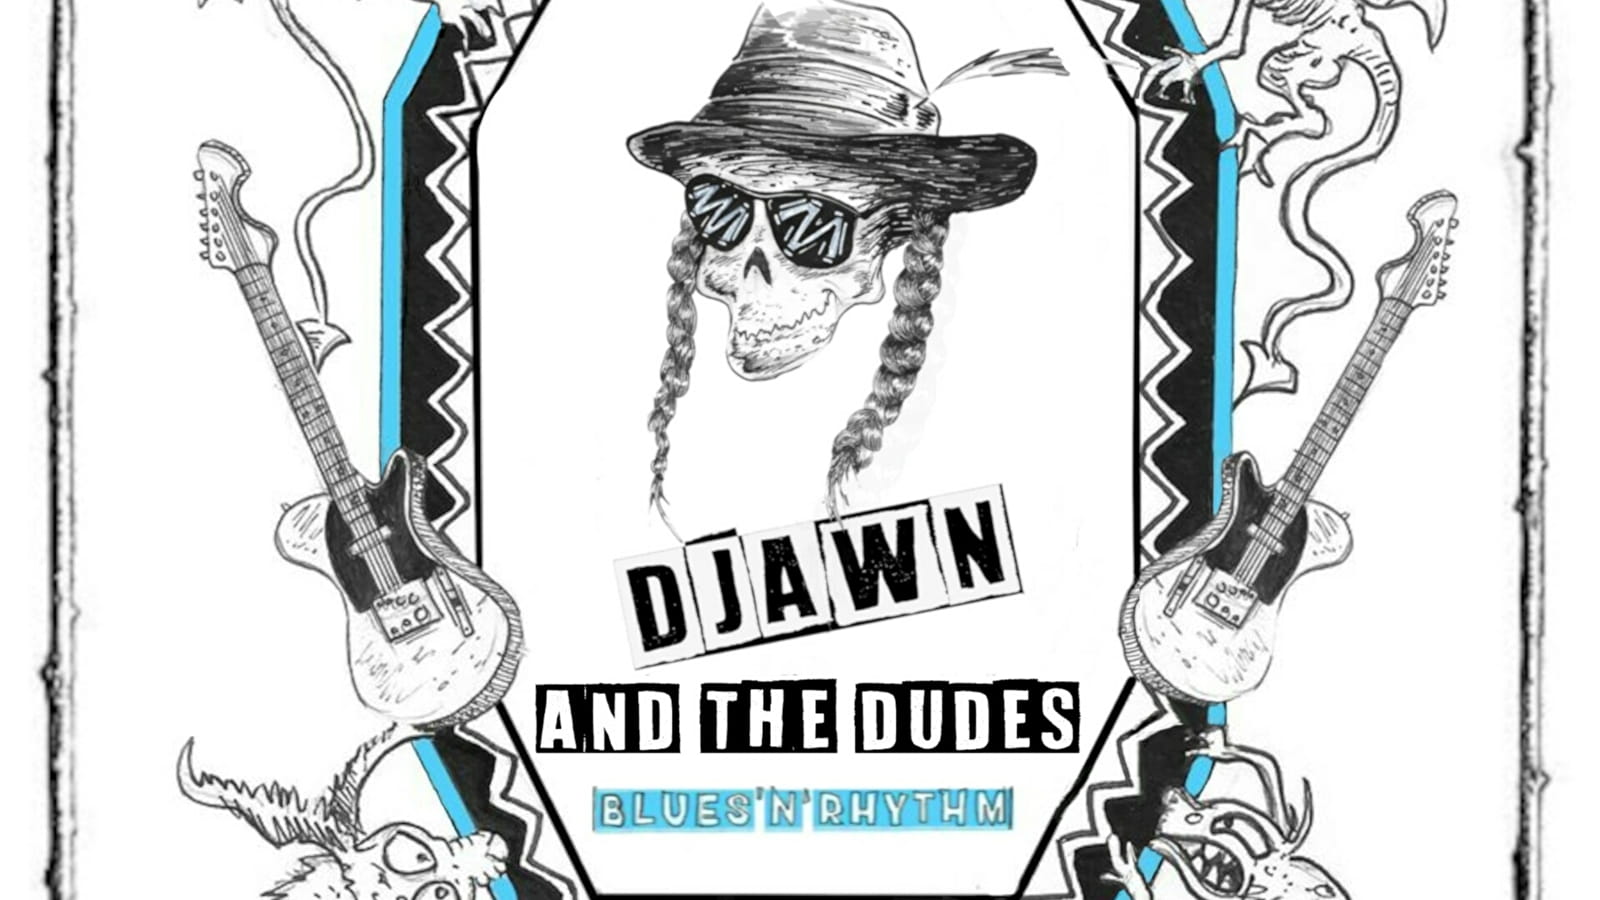 Concert Blues & Rock et Repas avec Djawn and the Dudes
